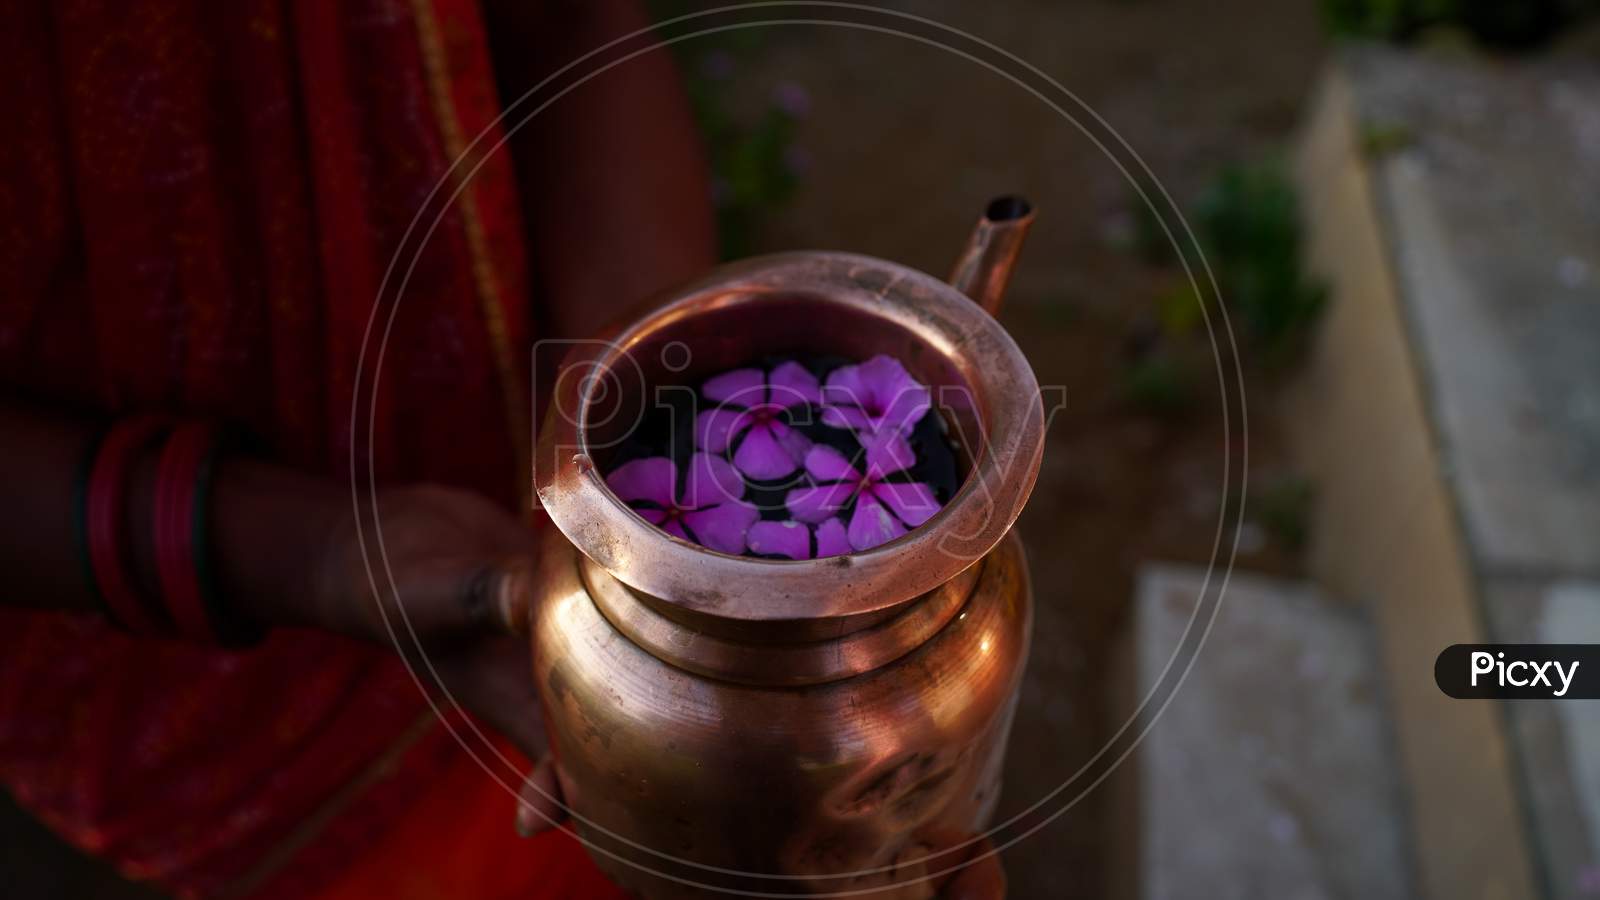 Copper Kalsh Full Of Sacred Water And Aroma Flowers. Sacred Kalash Or Mug To Worship God. Hindu Religion Concept.